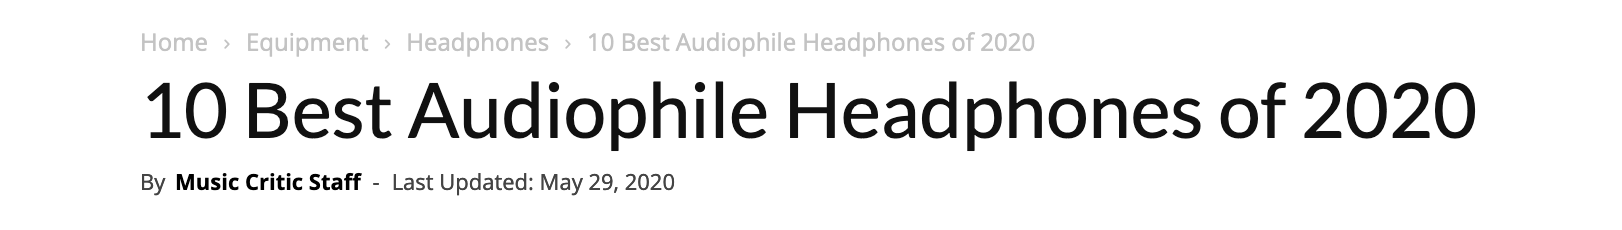 Music Critic Names Audeze LCD-4 #9 Best Audiophile Headphones